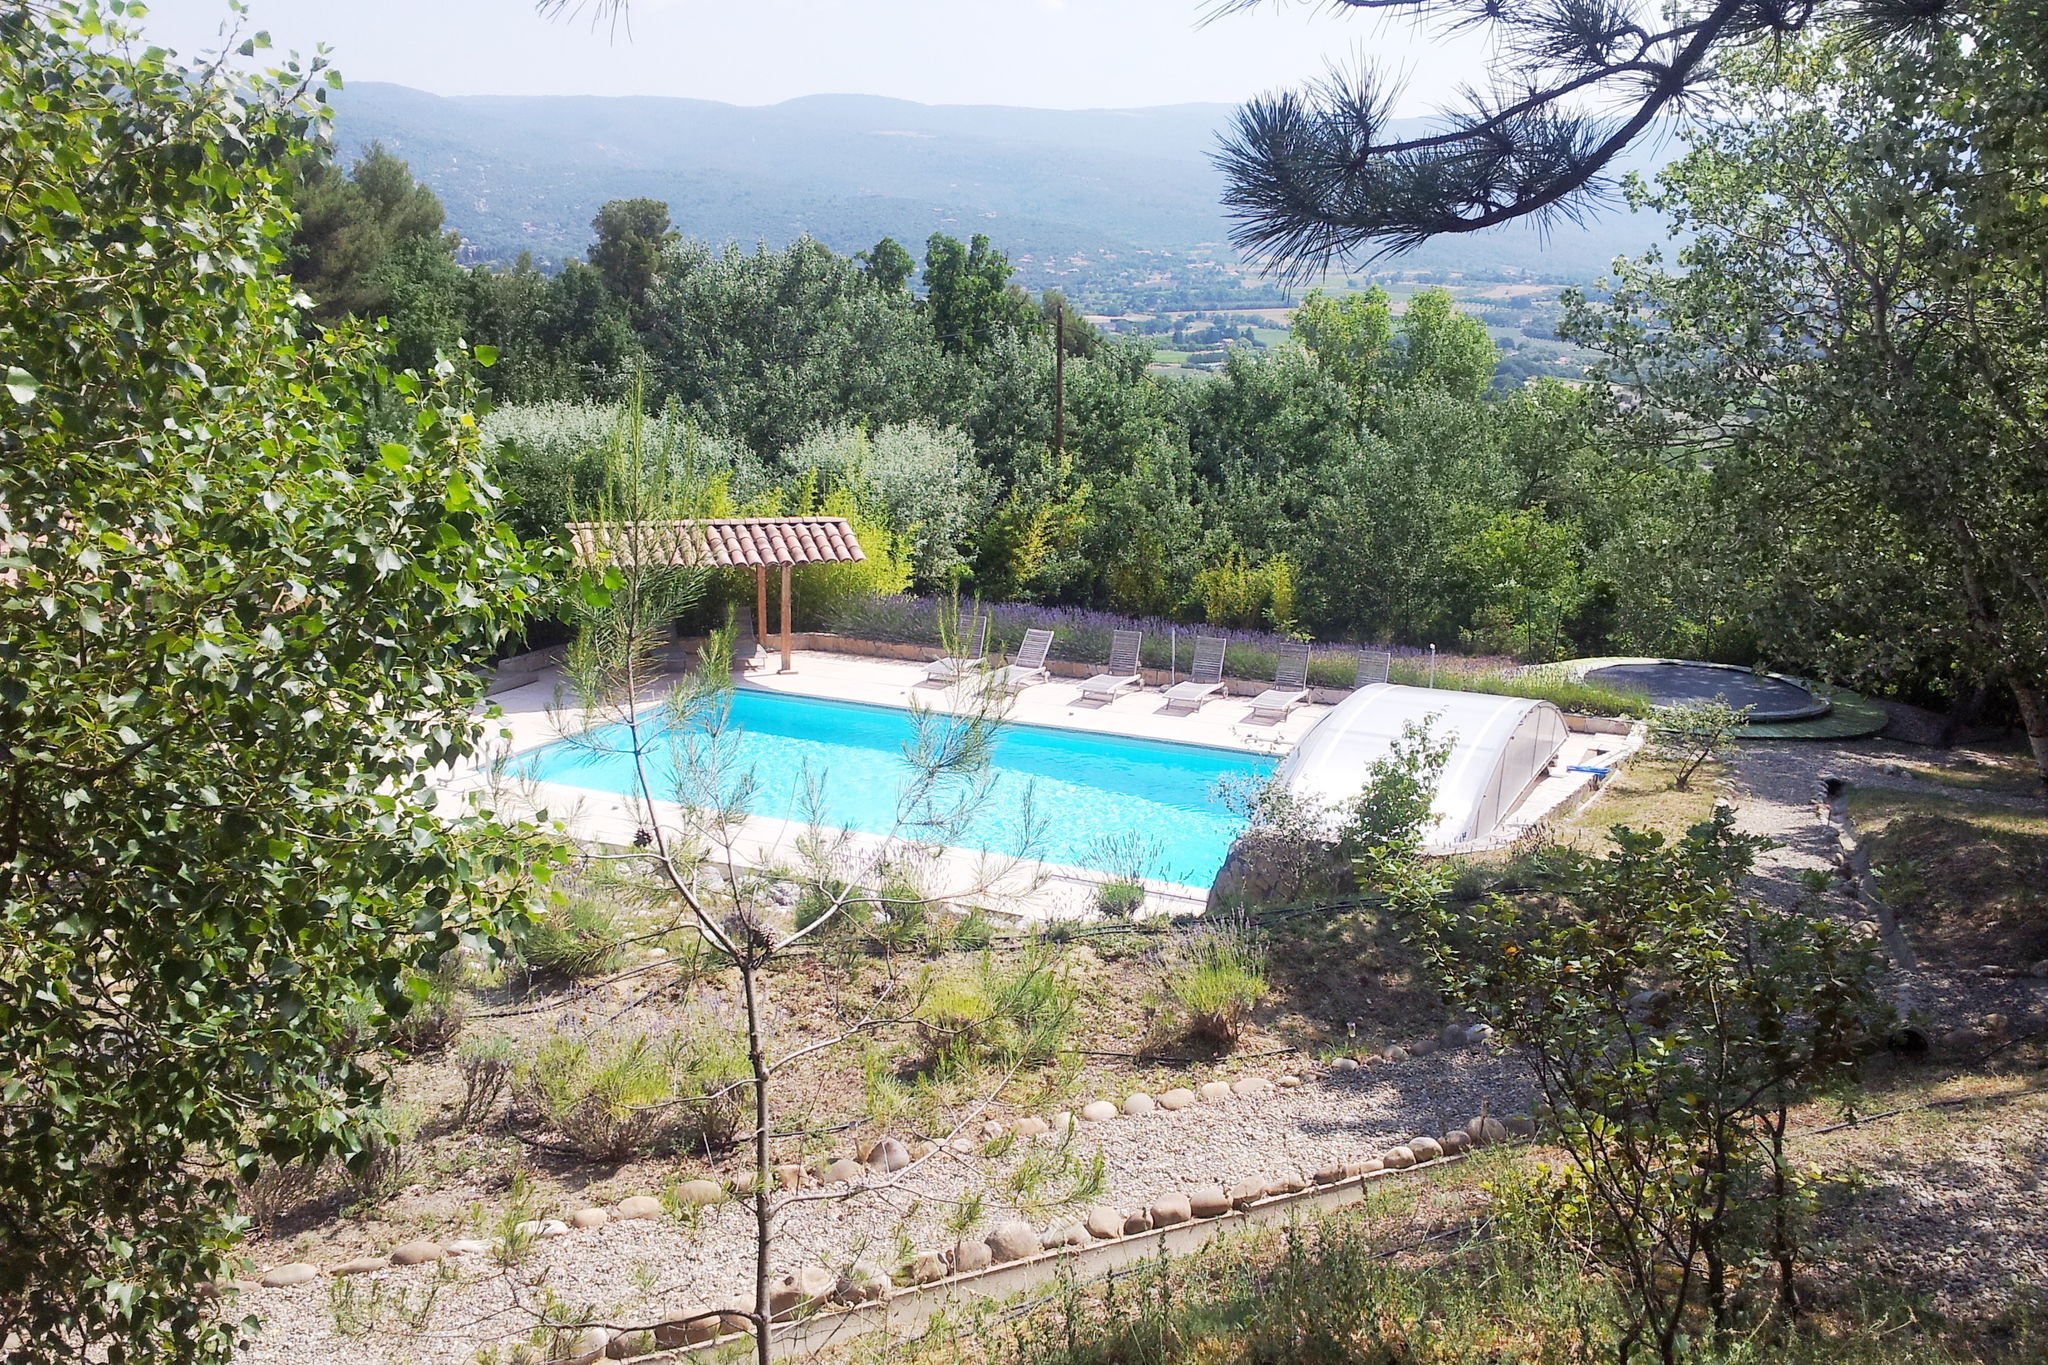 Vredige villa in Saint-Saturnin-lès-Apt met zwembad